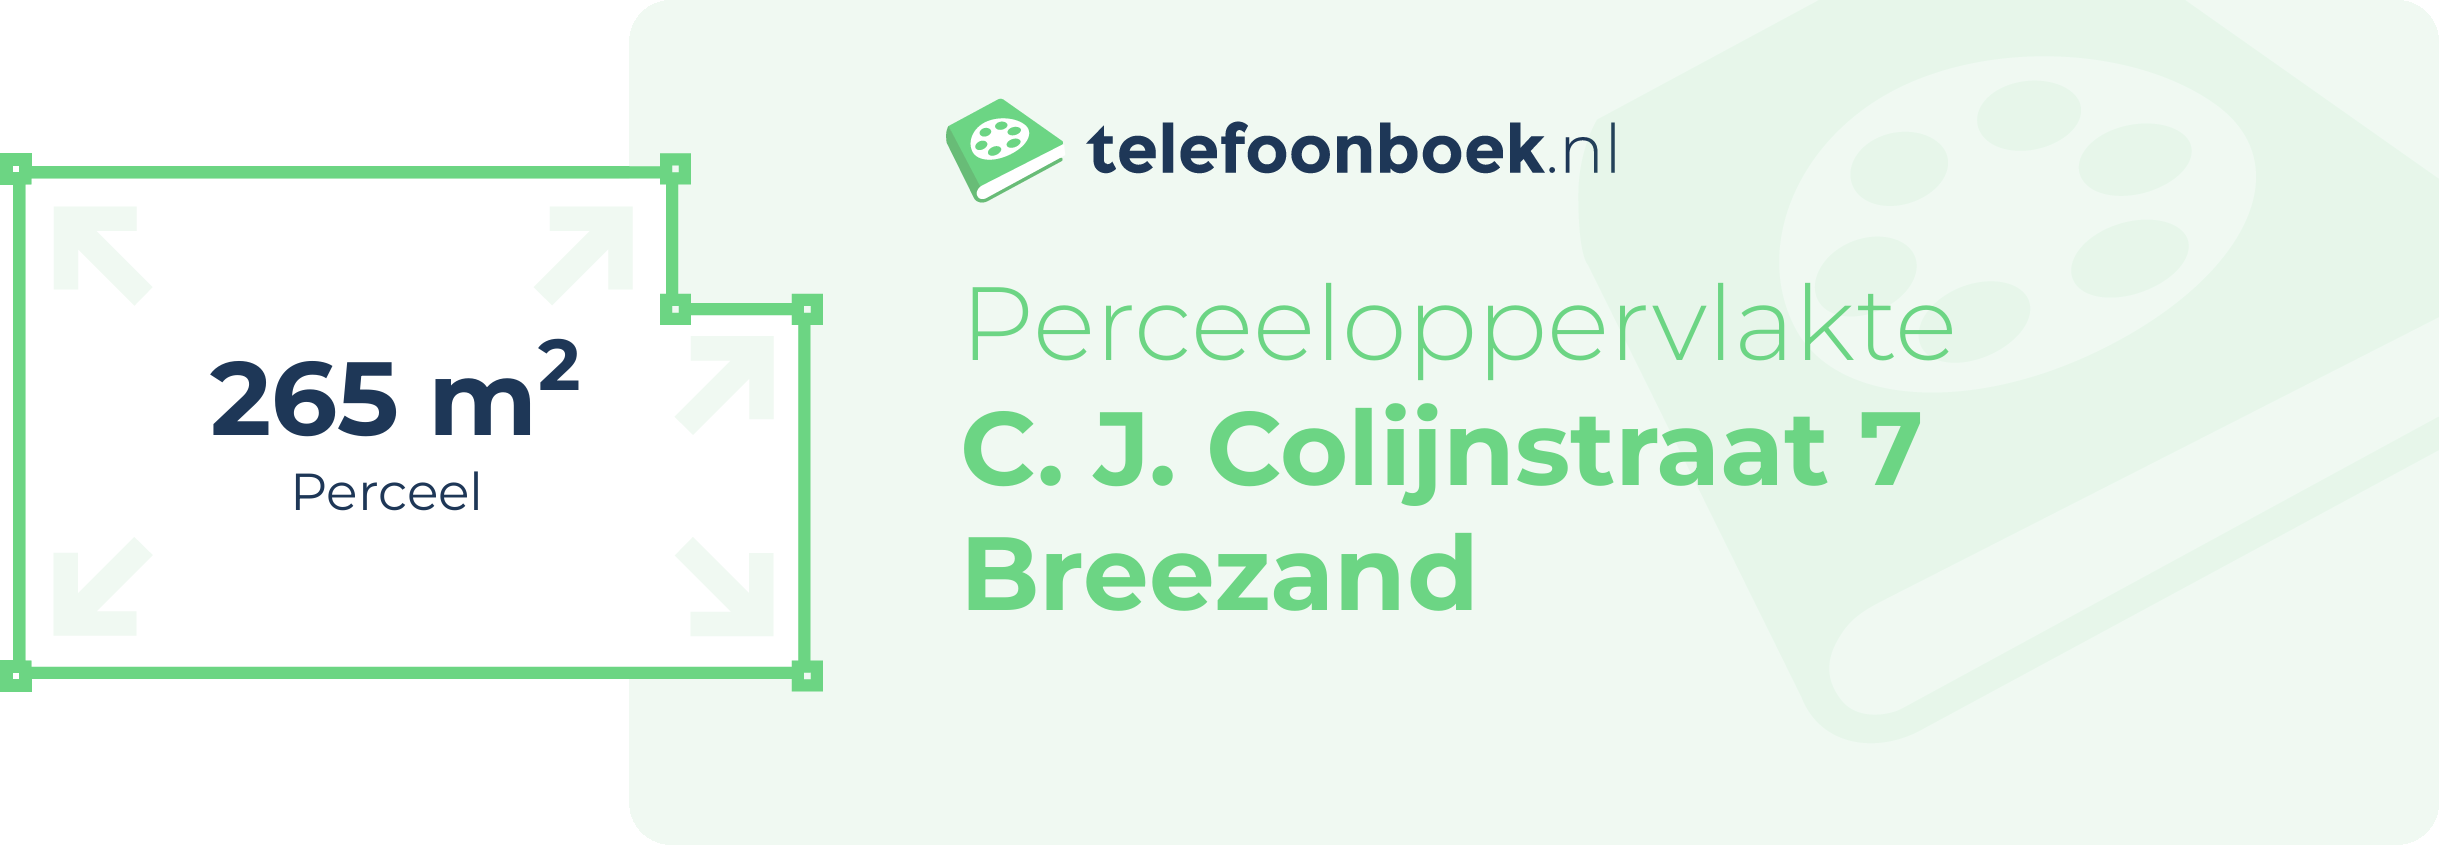 Perceeloppervlakte C. J. Colijnstraat 7 Breezand